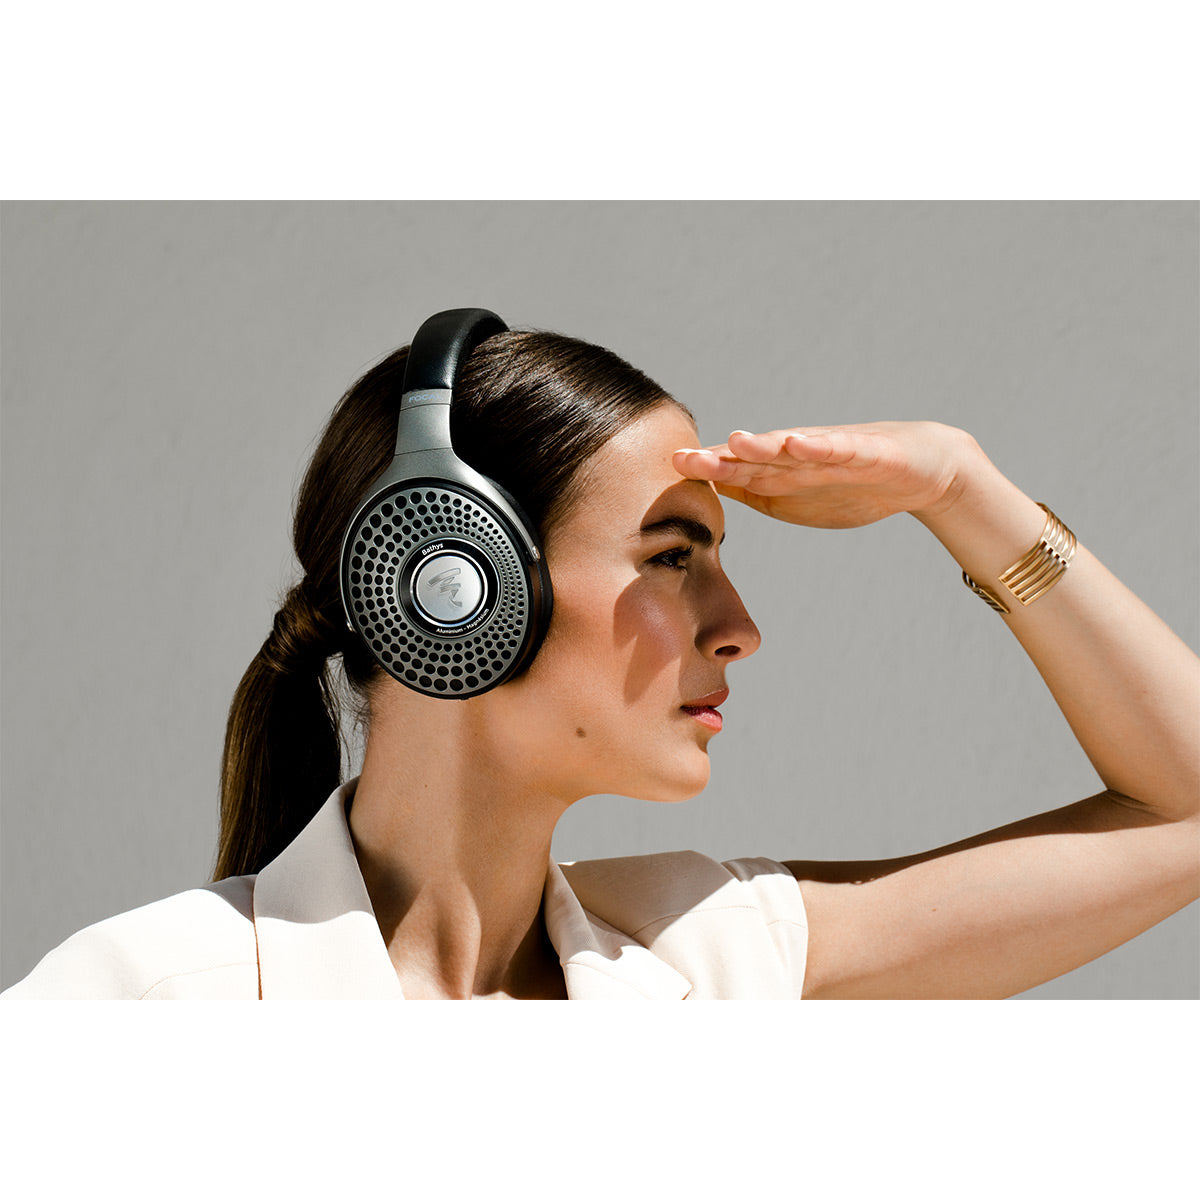 Bathys - Hi-Fi Bluetooth® active noise cancelling headphones